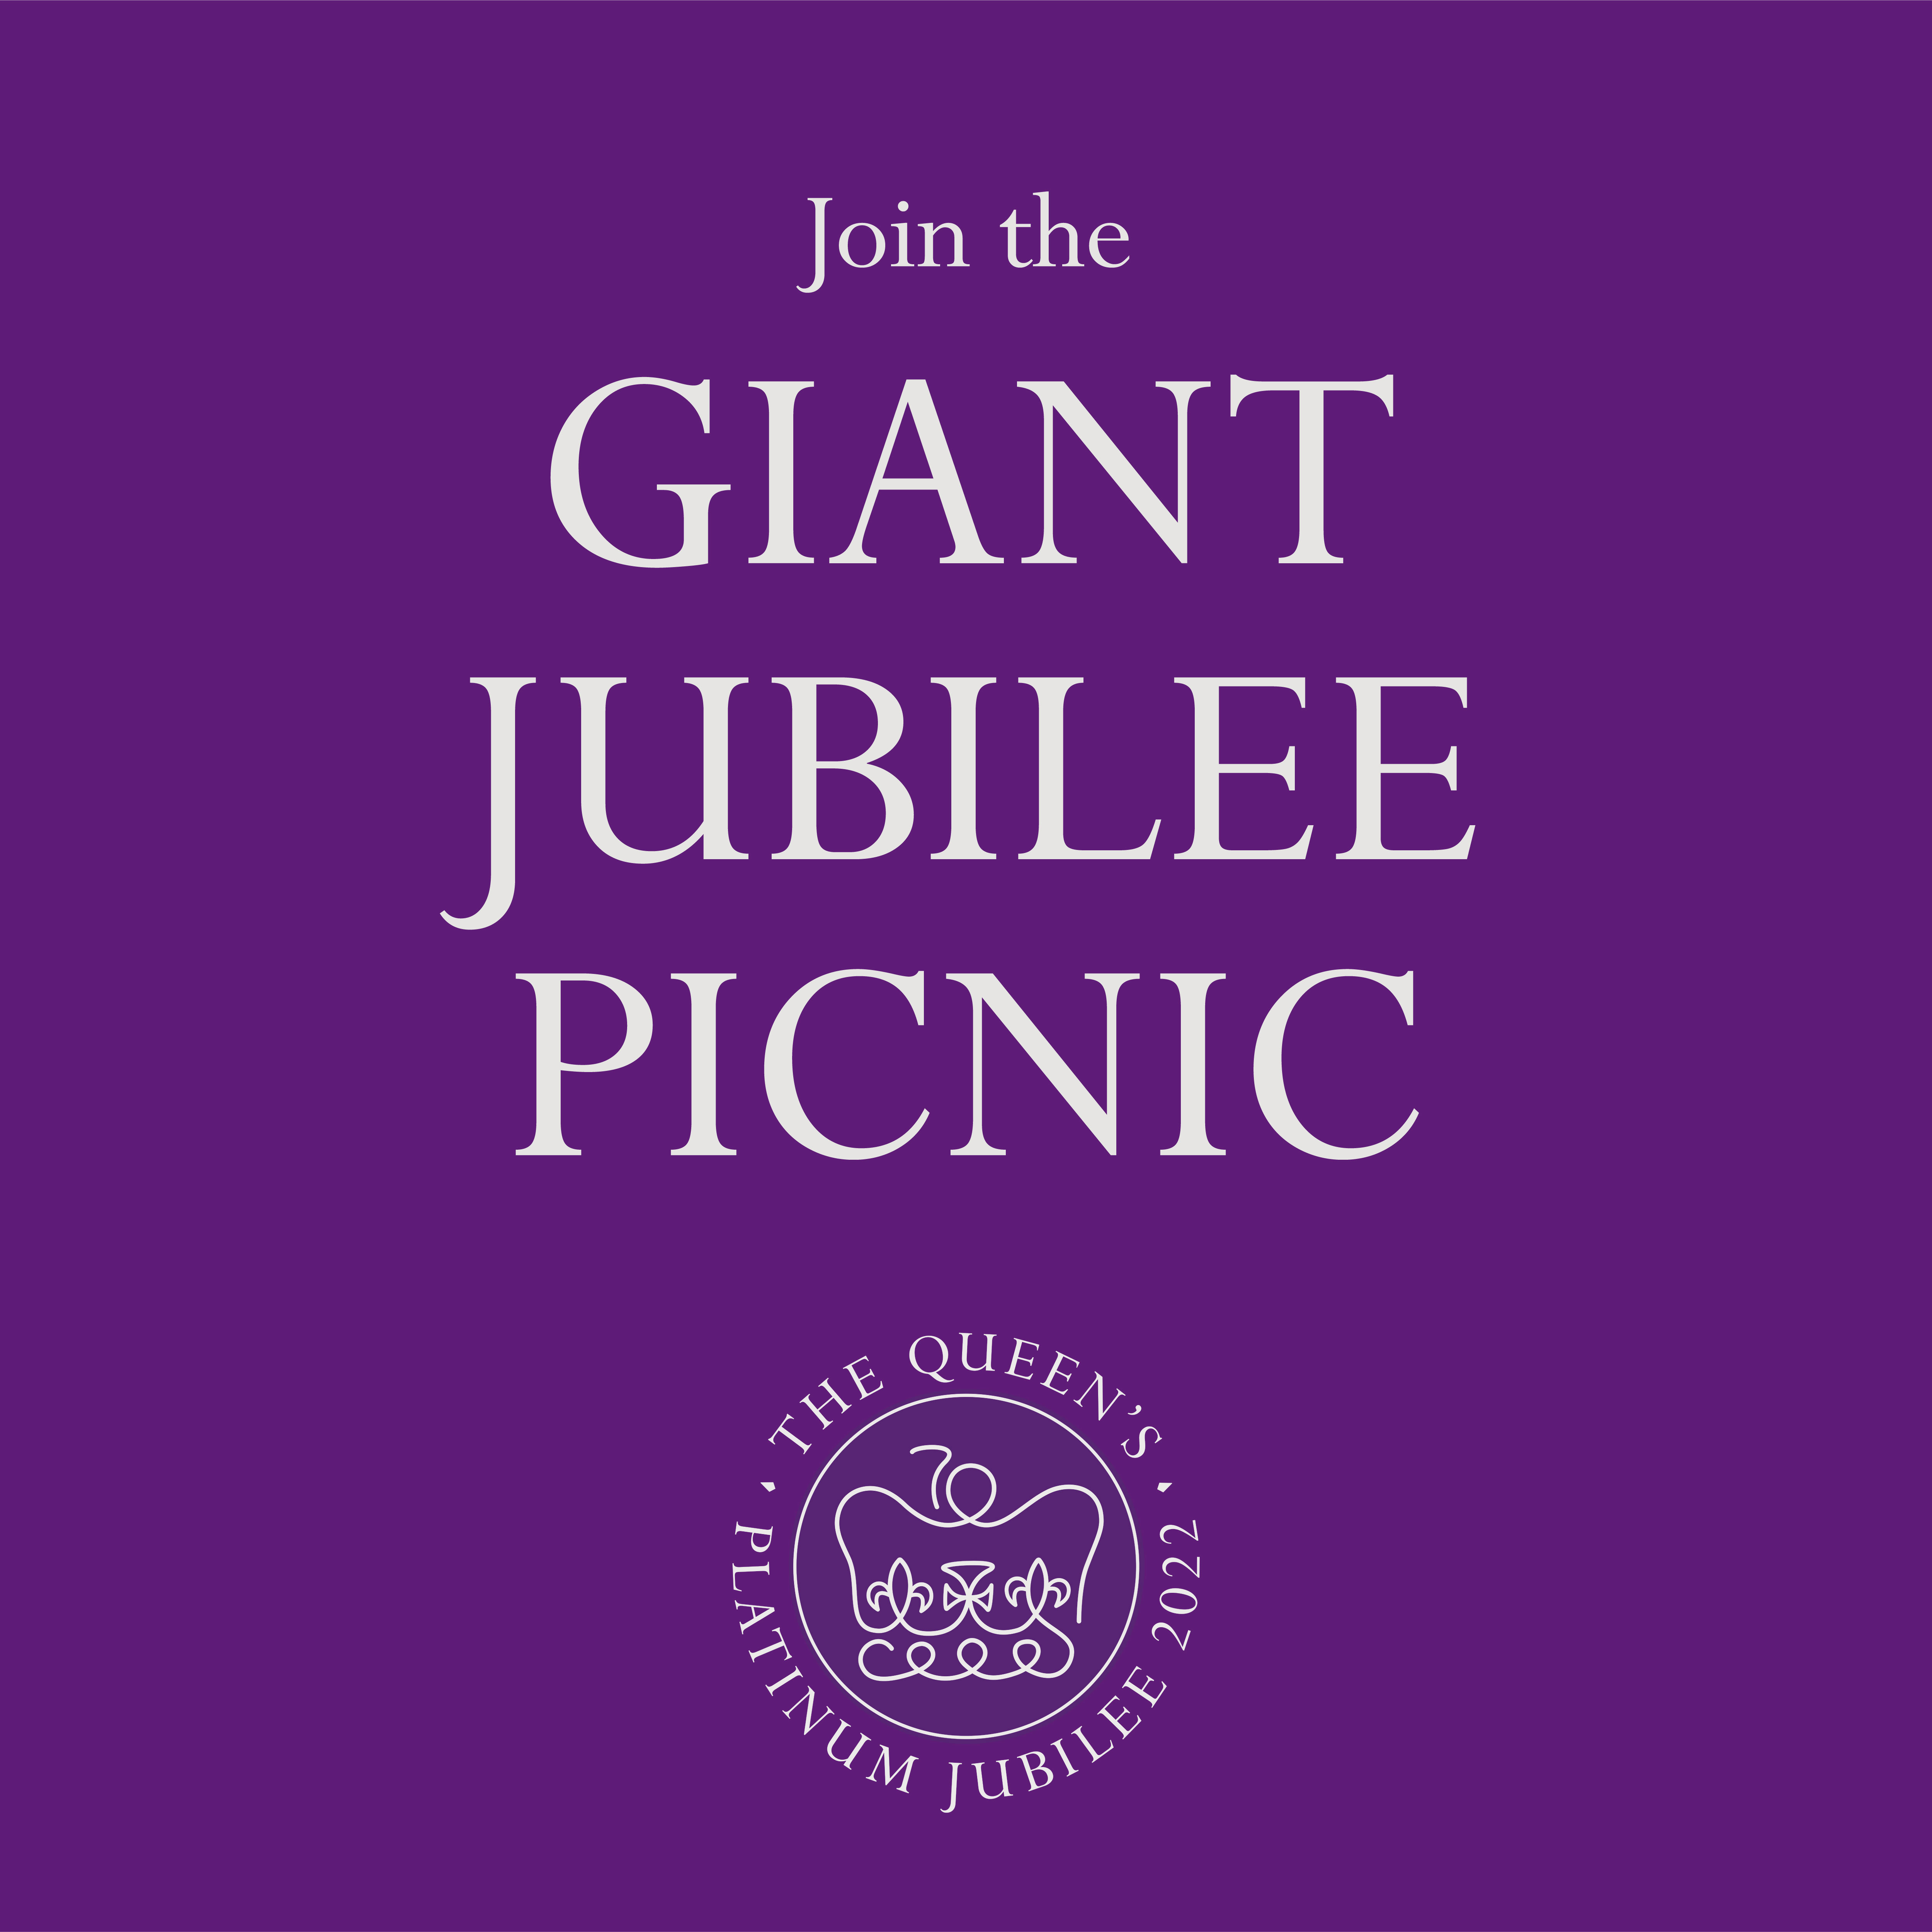 Giant jubilee picnic logo